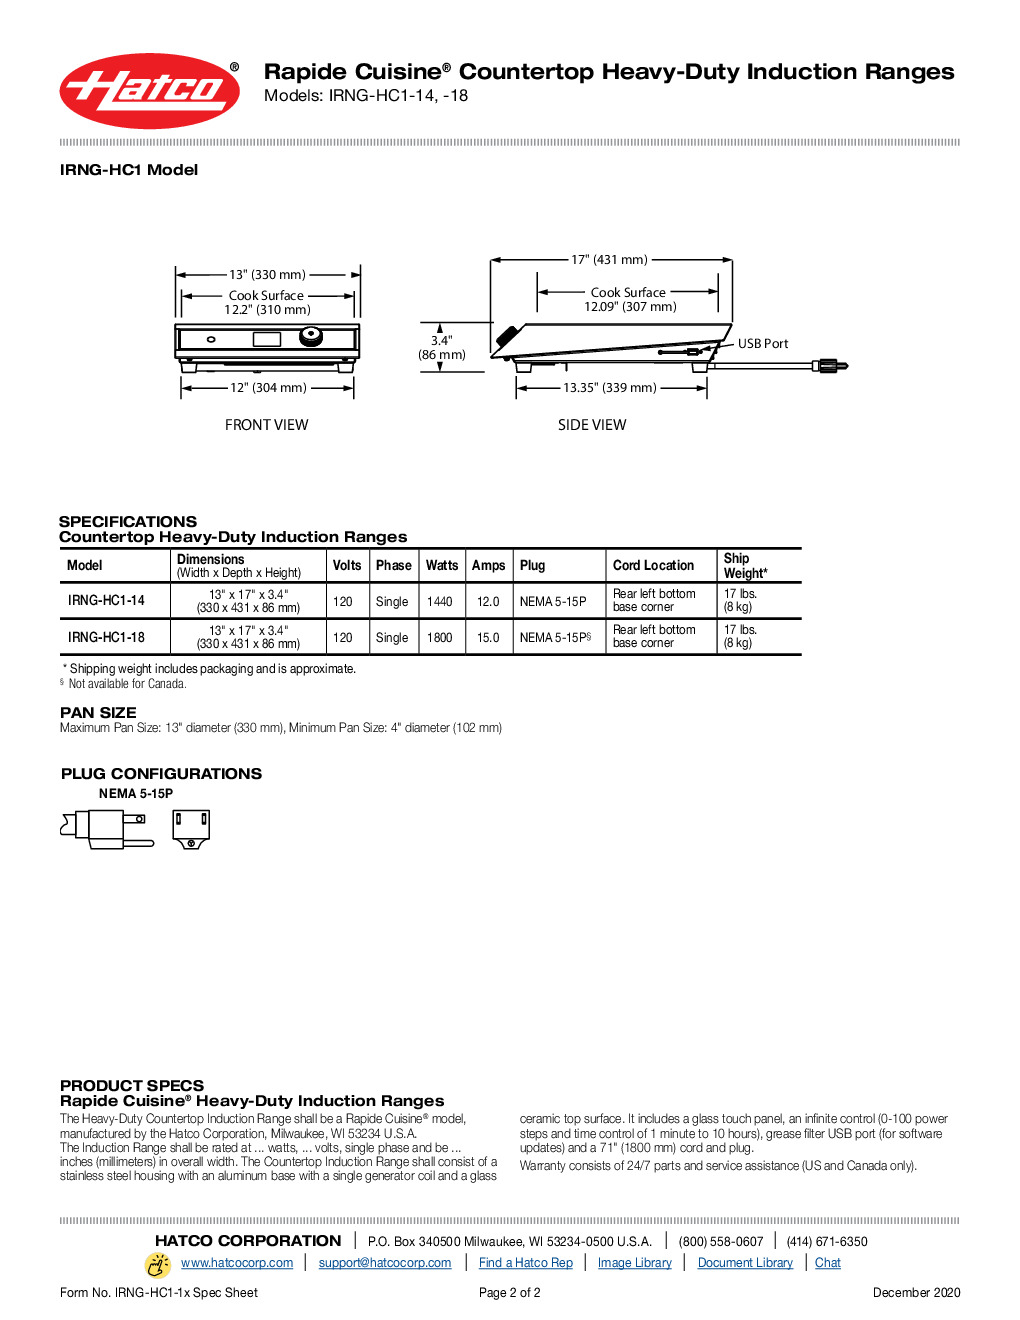 Hatco IRNGHC118SB515 Countertop Induction Range